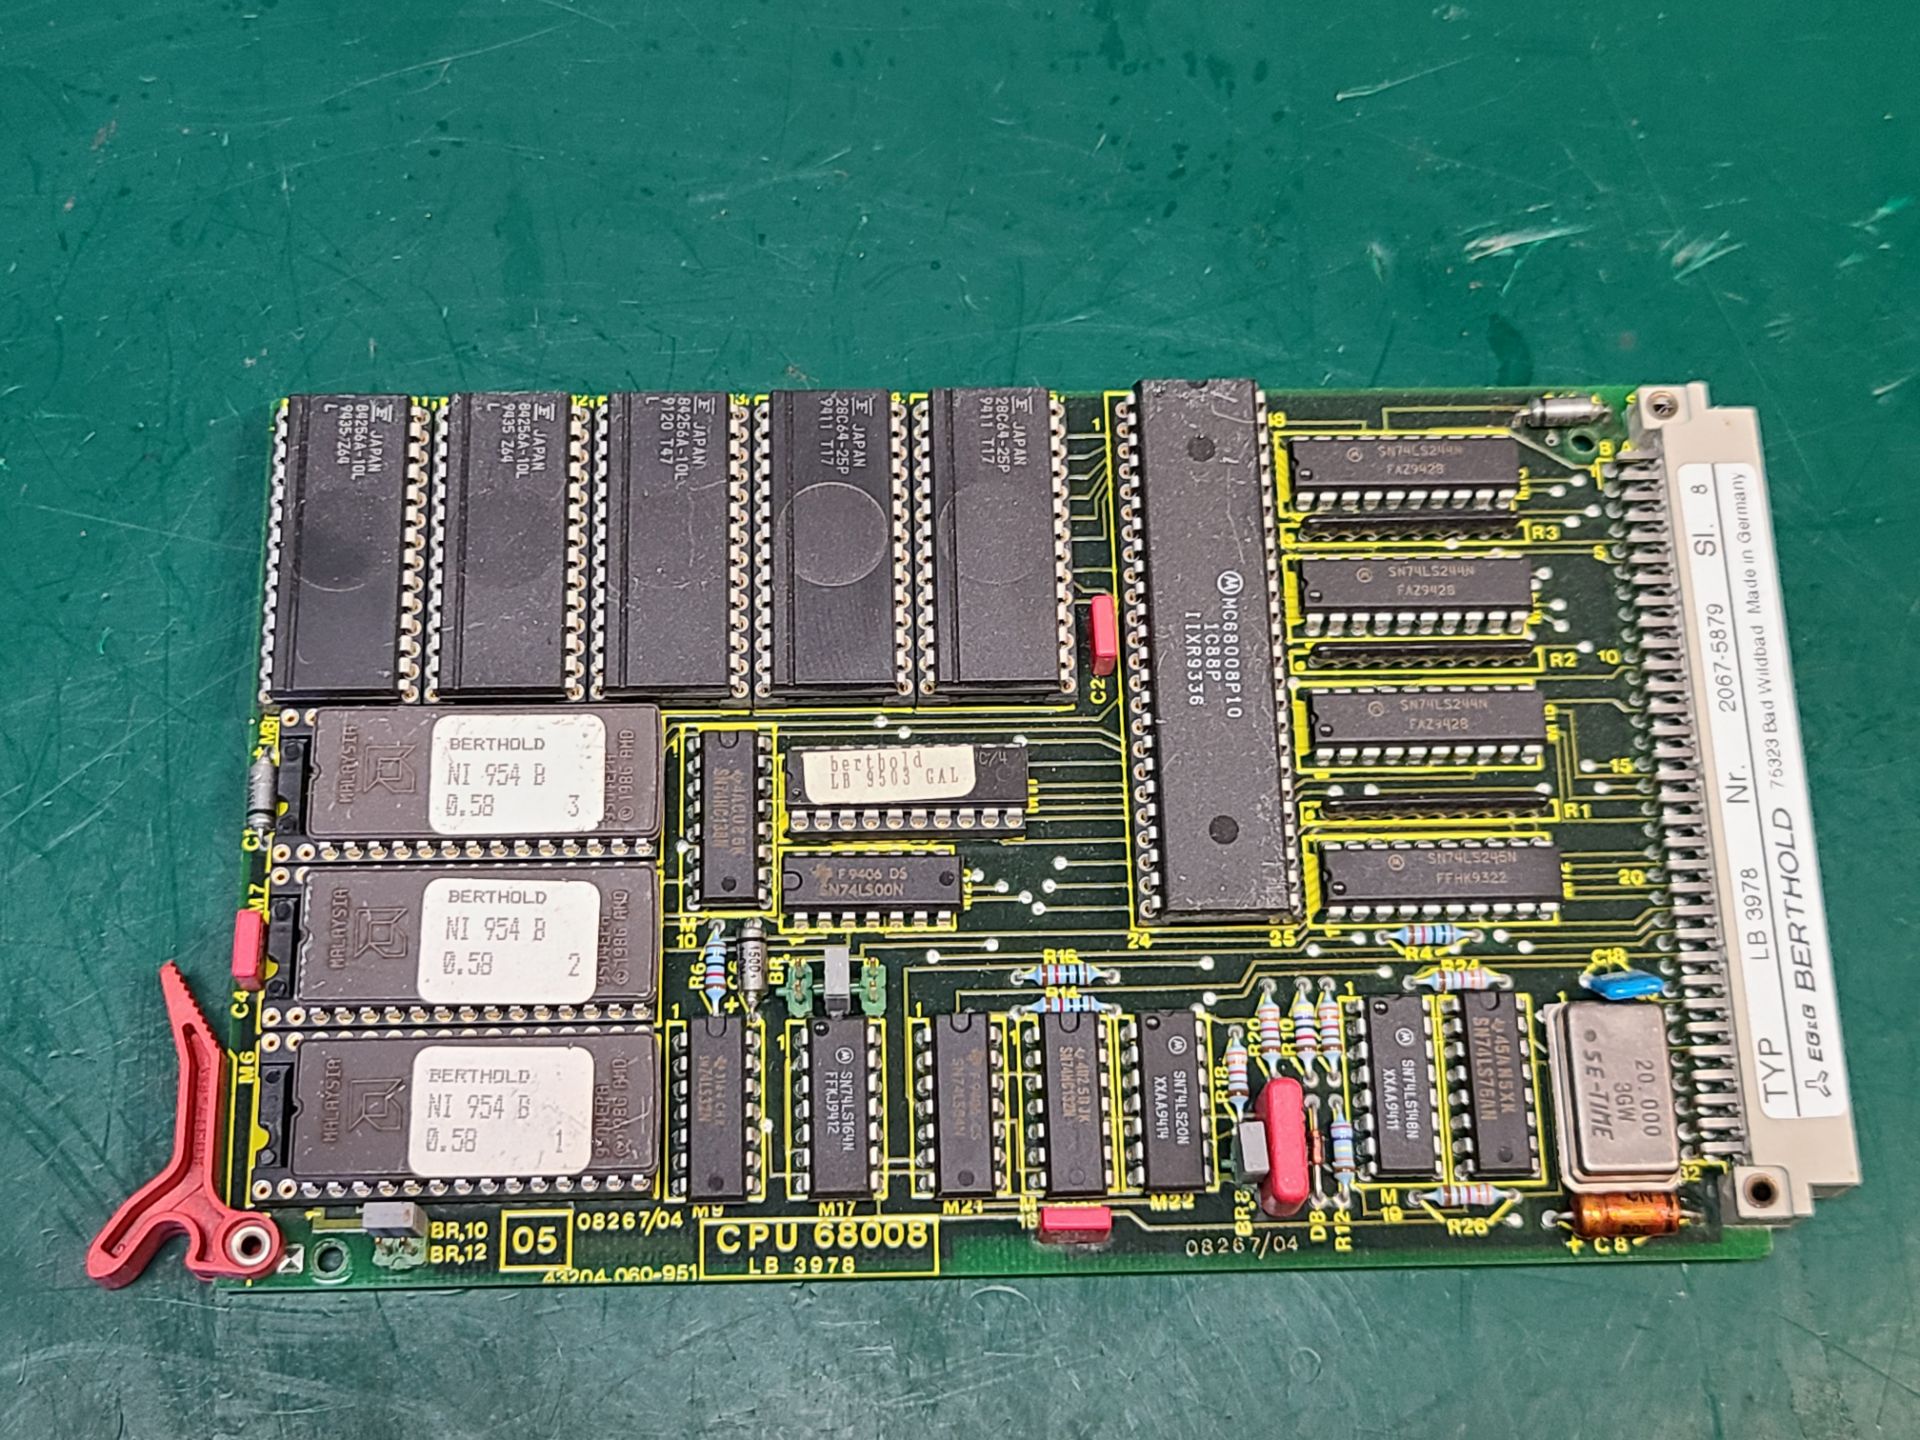 BERTHOLD CPU 68008 BOARD